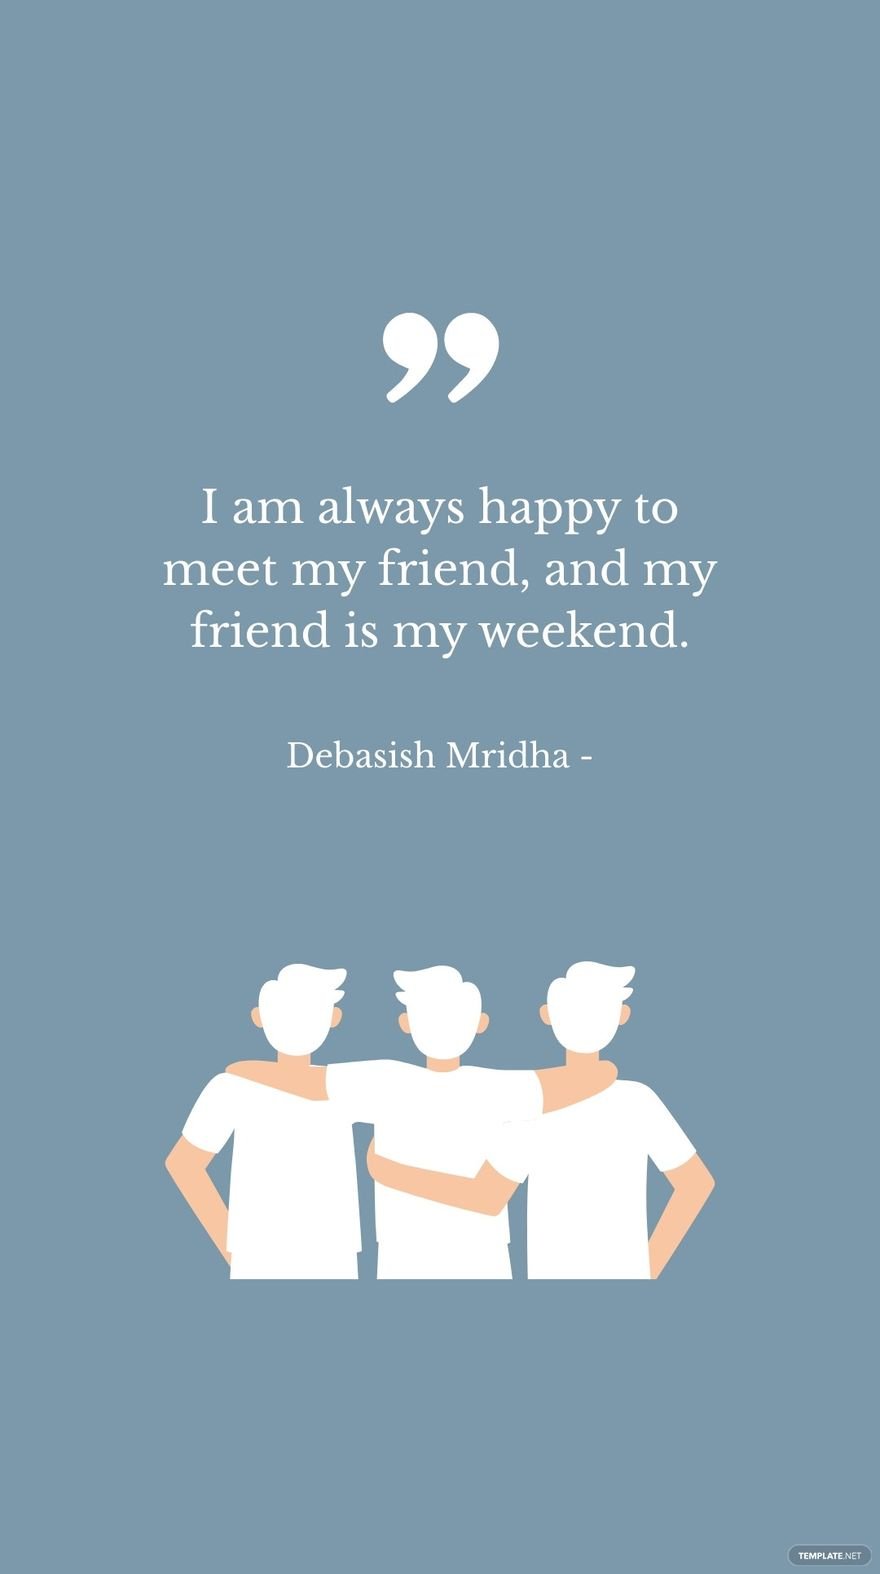 Free Debasish Mridha - I am always happy to meet my friend, and my friend is my weekend. in JPG